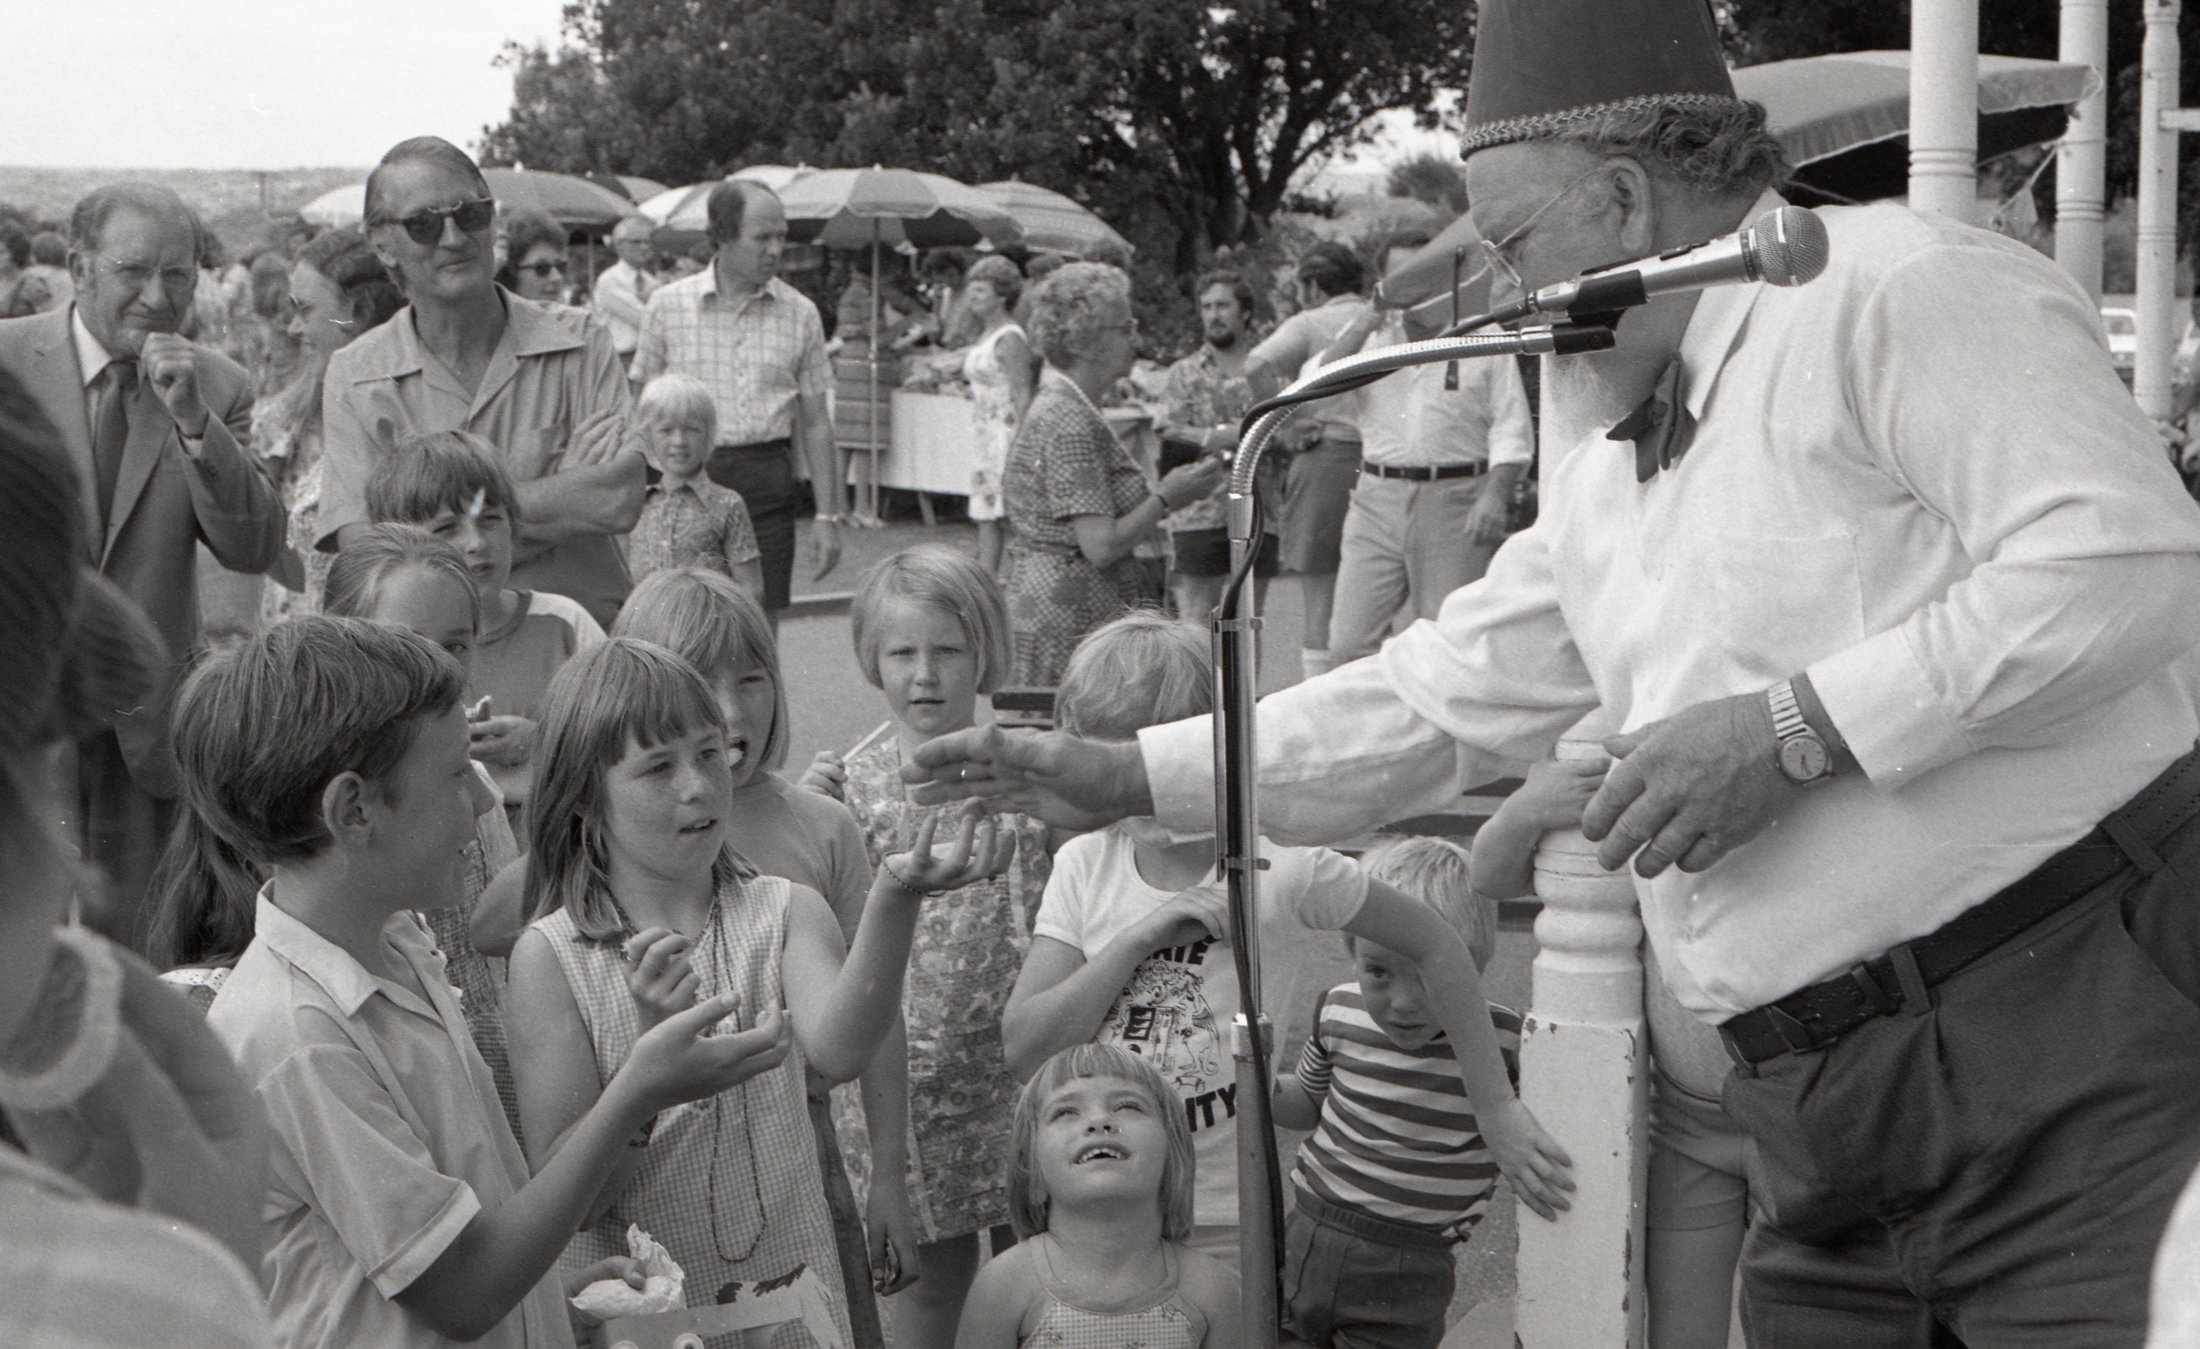 1975 - KC Fair - Crowd Of Children